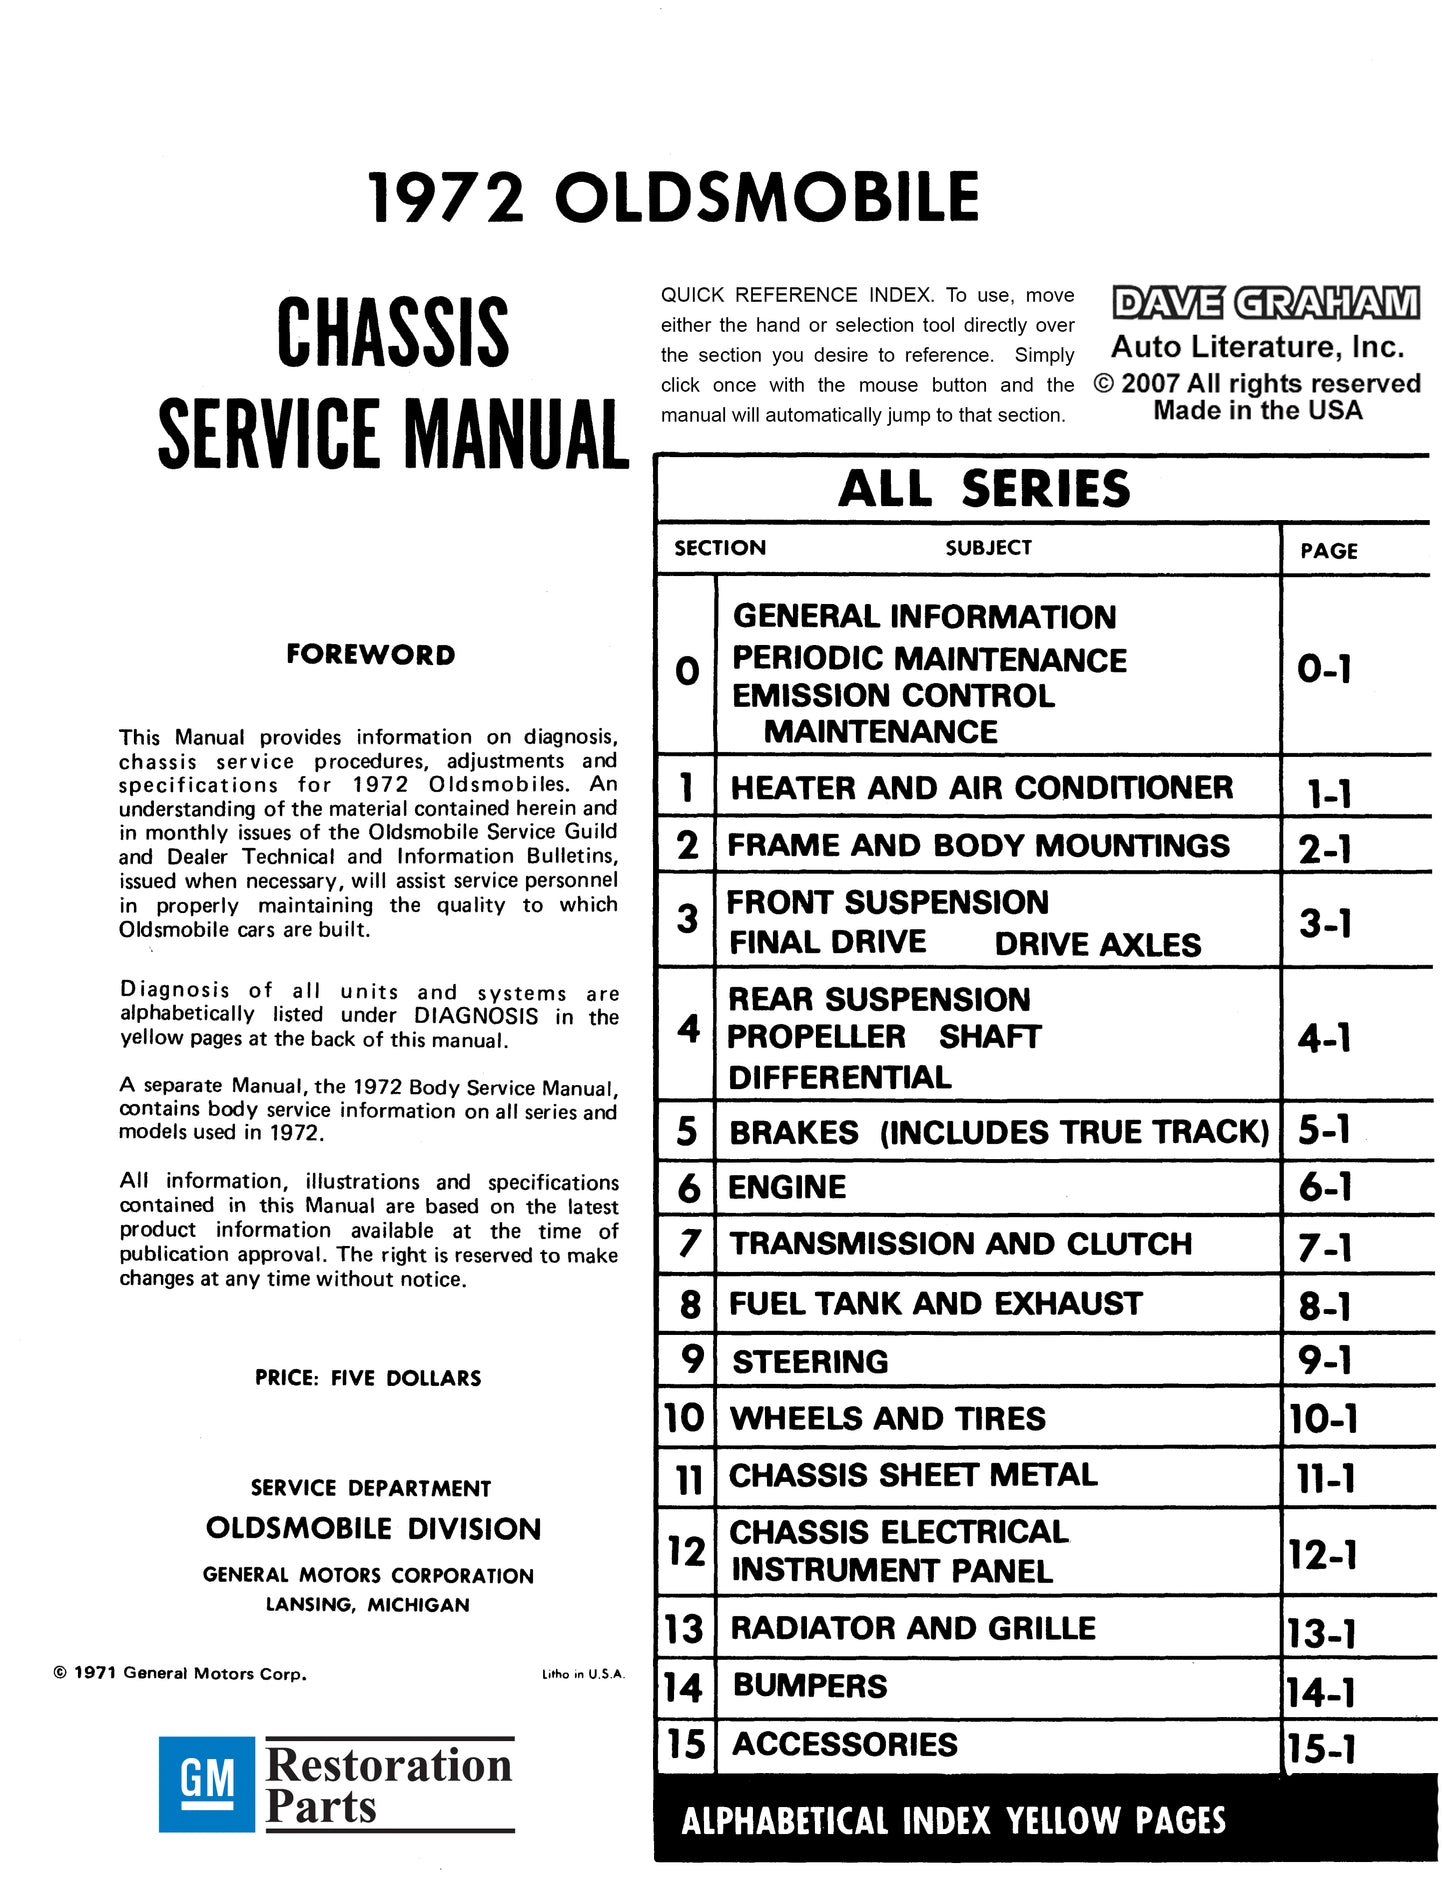 1972 Oldsmobile Shop Manual & Body Manual - All Models